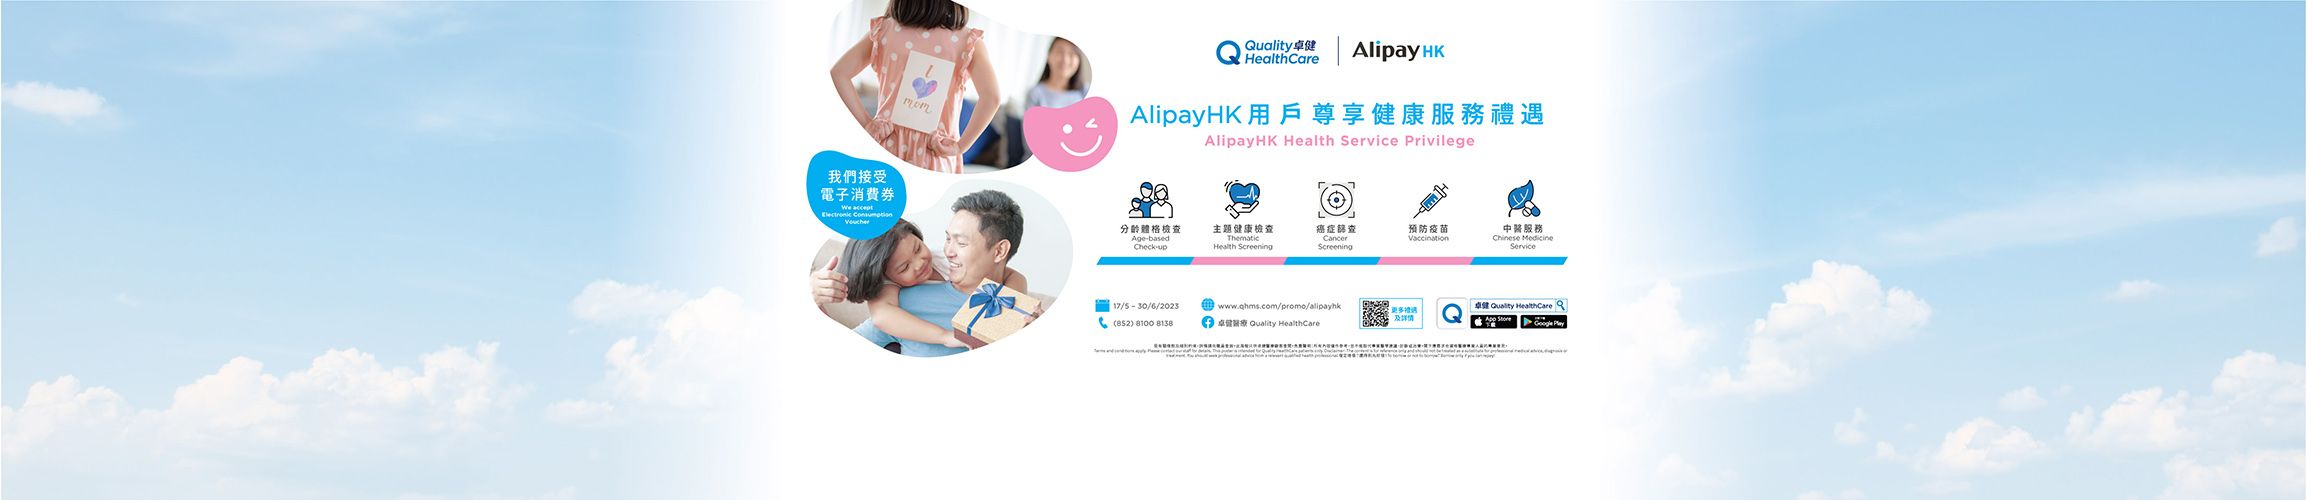 click for AlipayHK promotion details